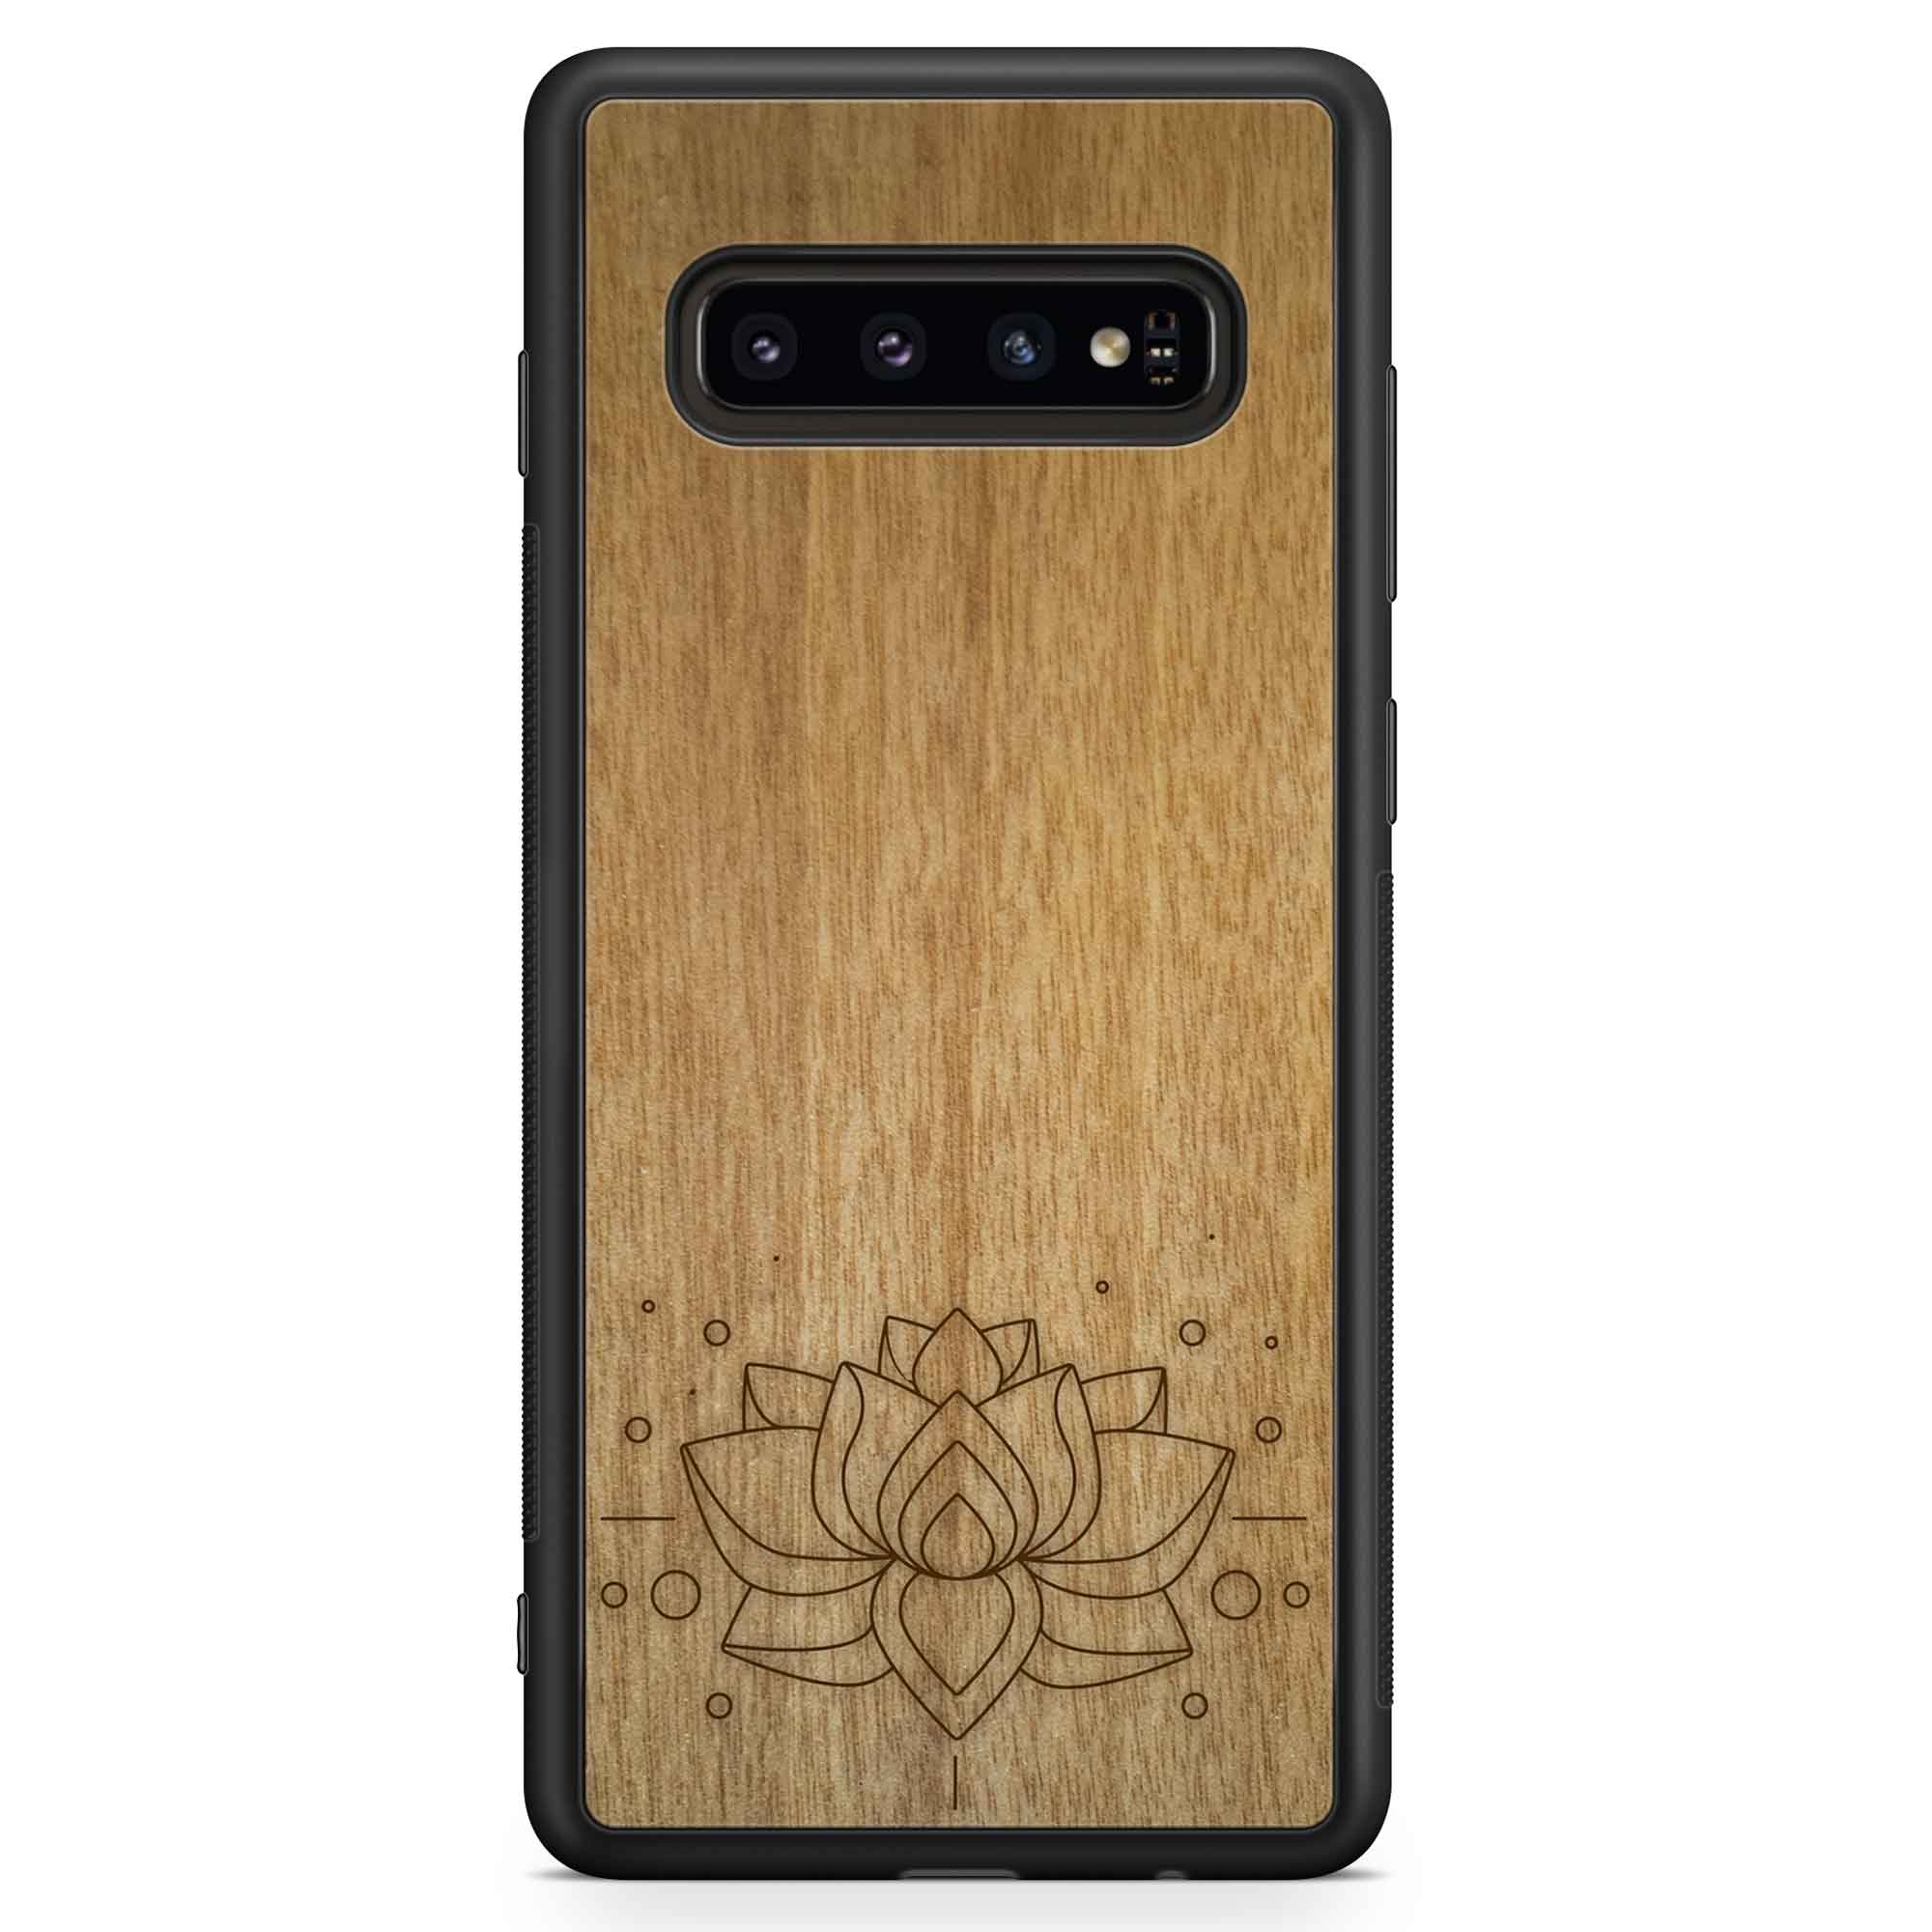 Carcasa de madera para teléfono con grabado Lotus Samsung S10 Plus